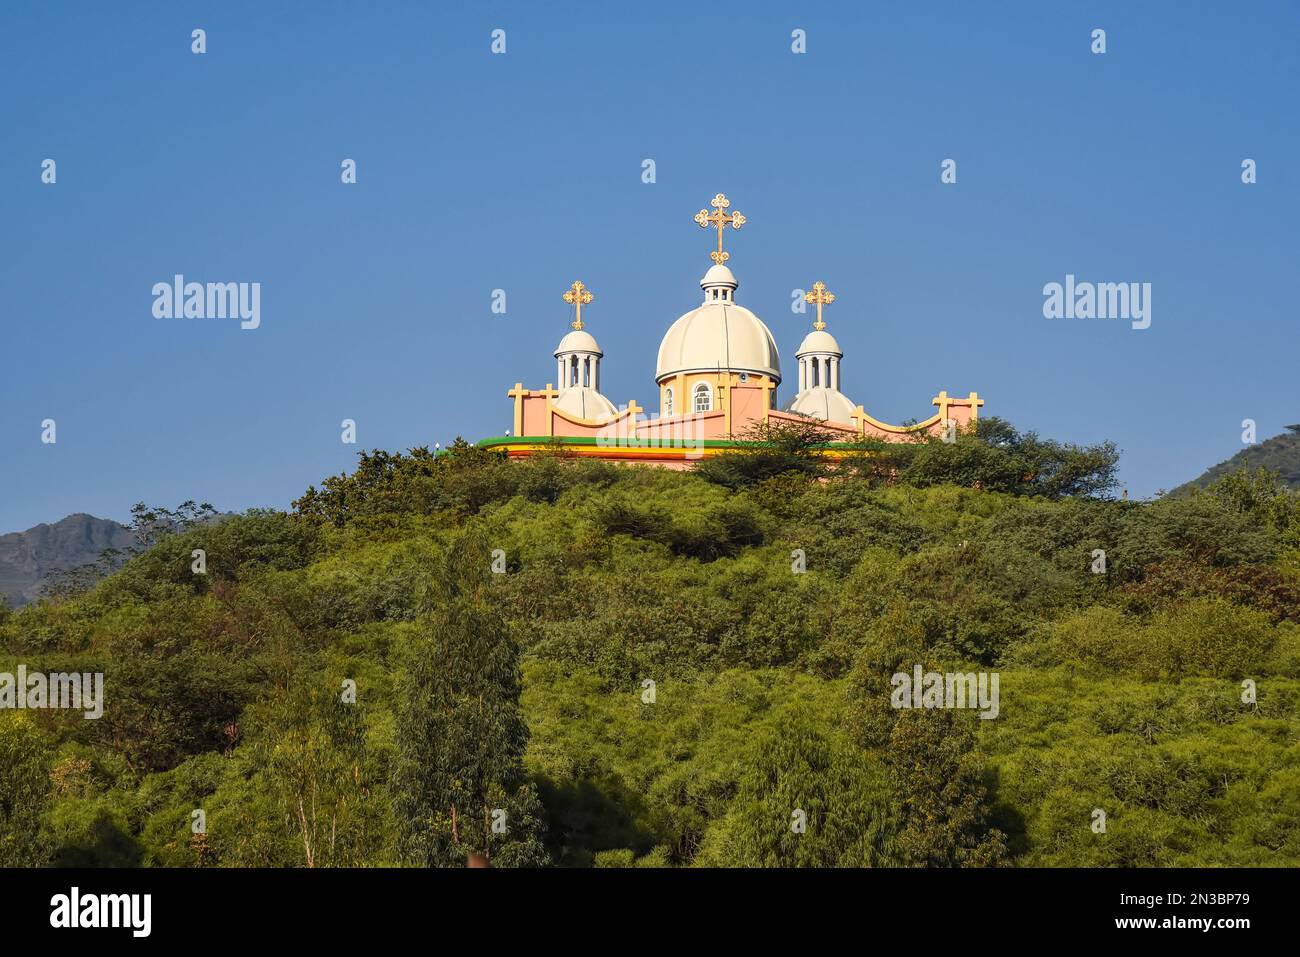 Ethiopian Orthodox Church on a mountaintop with a blue sky; Ethiopia Stock Photo